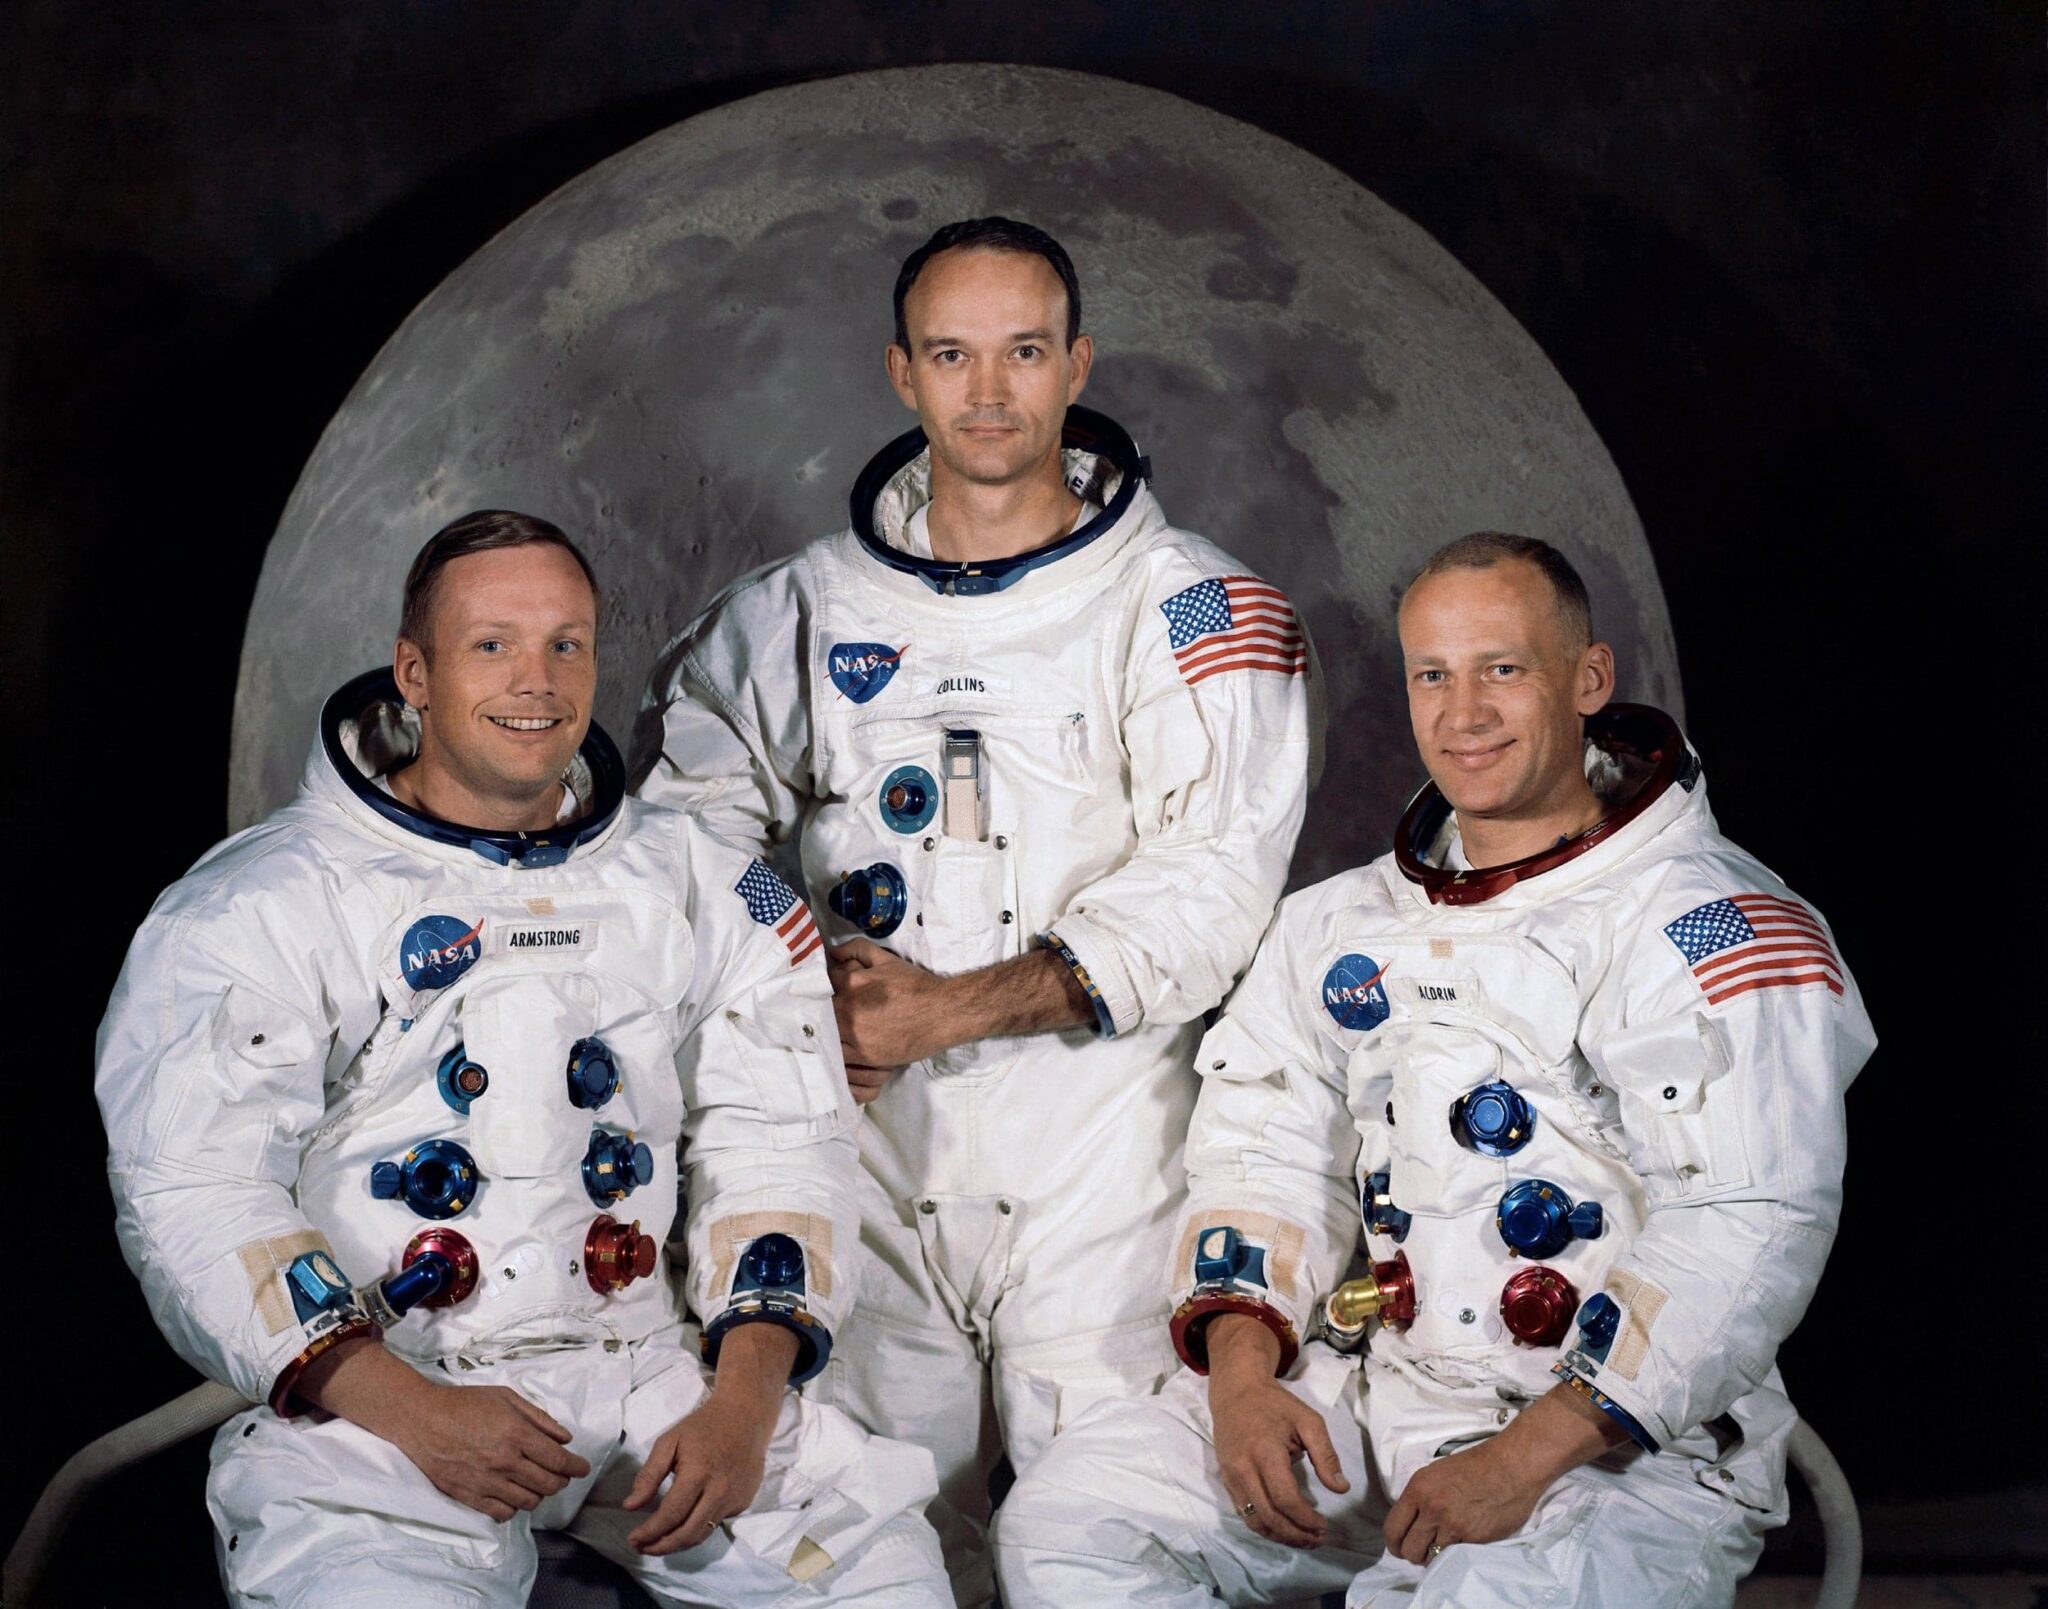 The three astronauts of Apollo 11